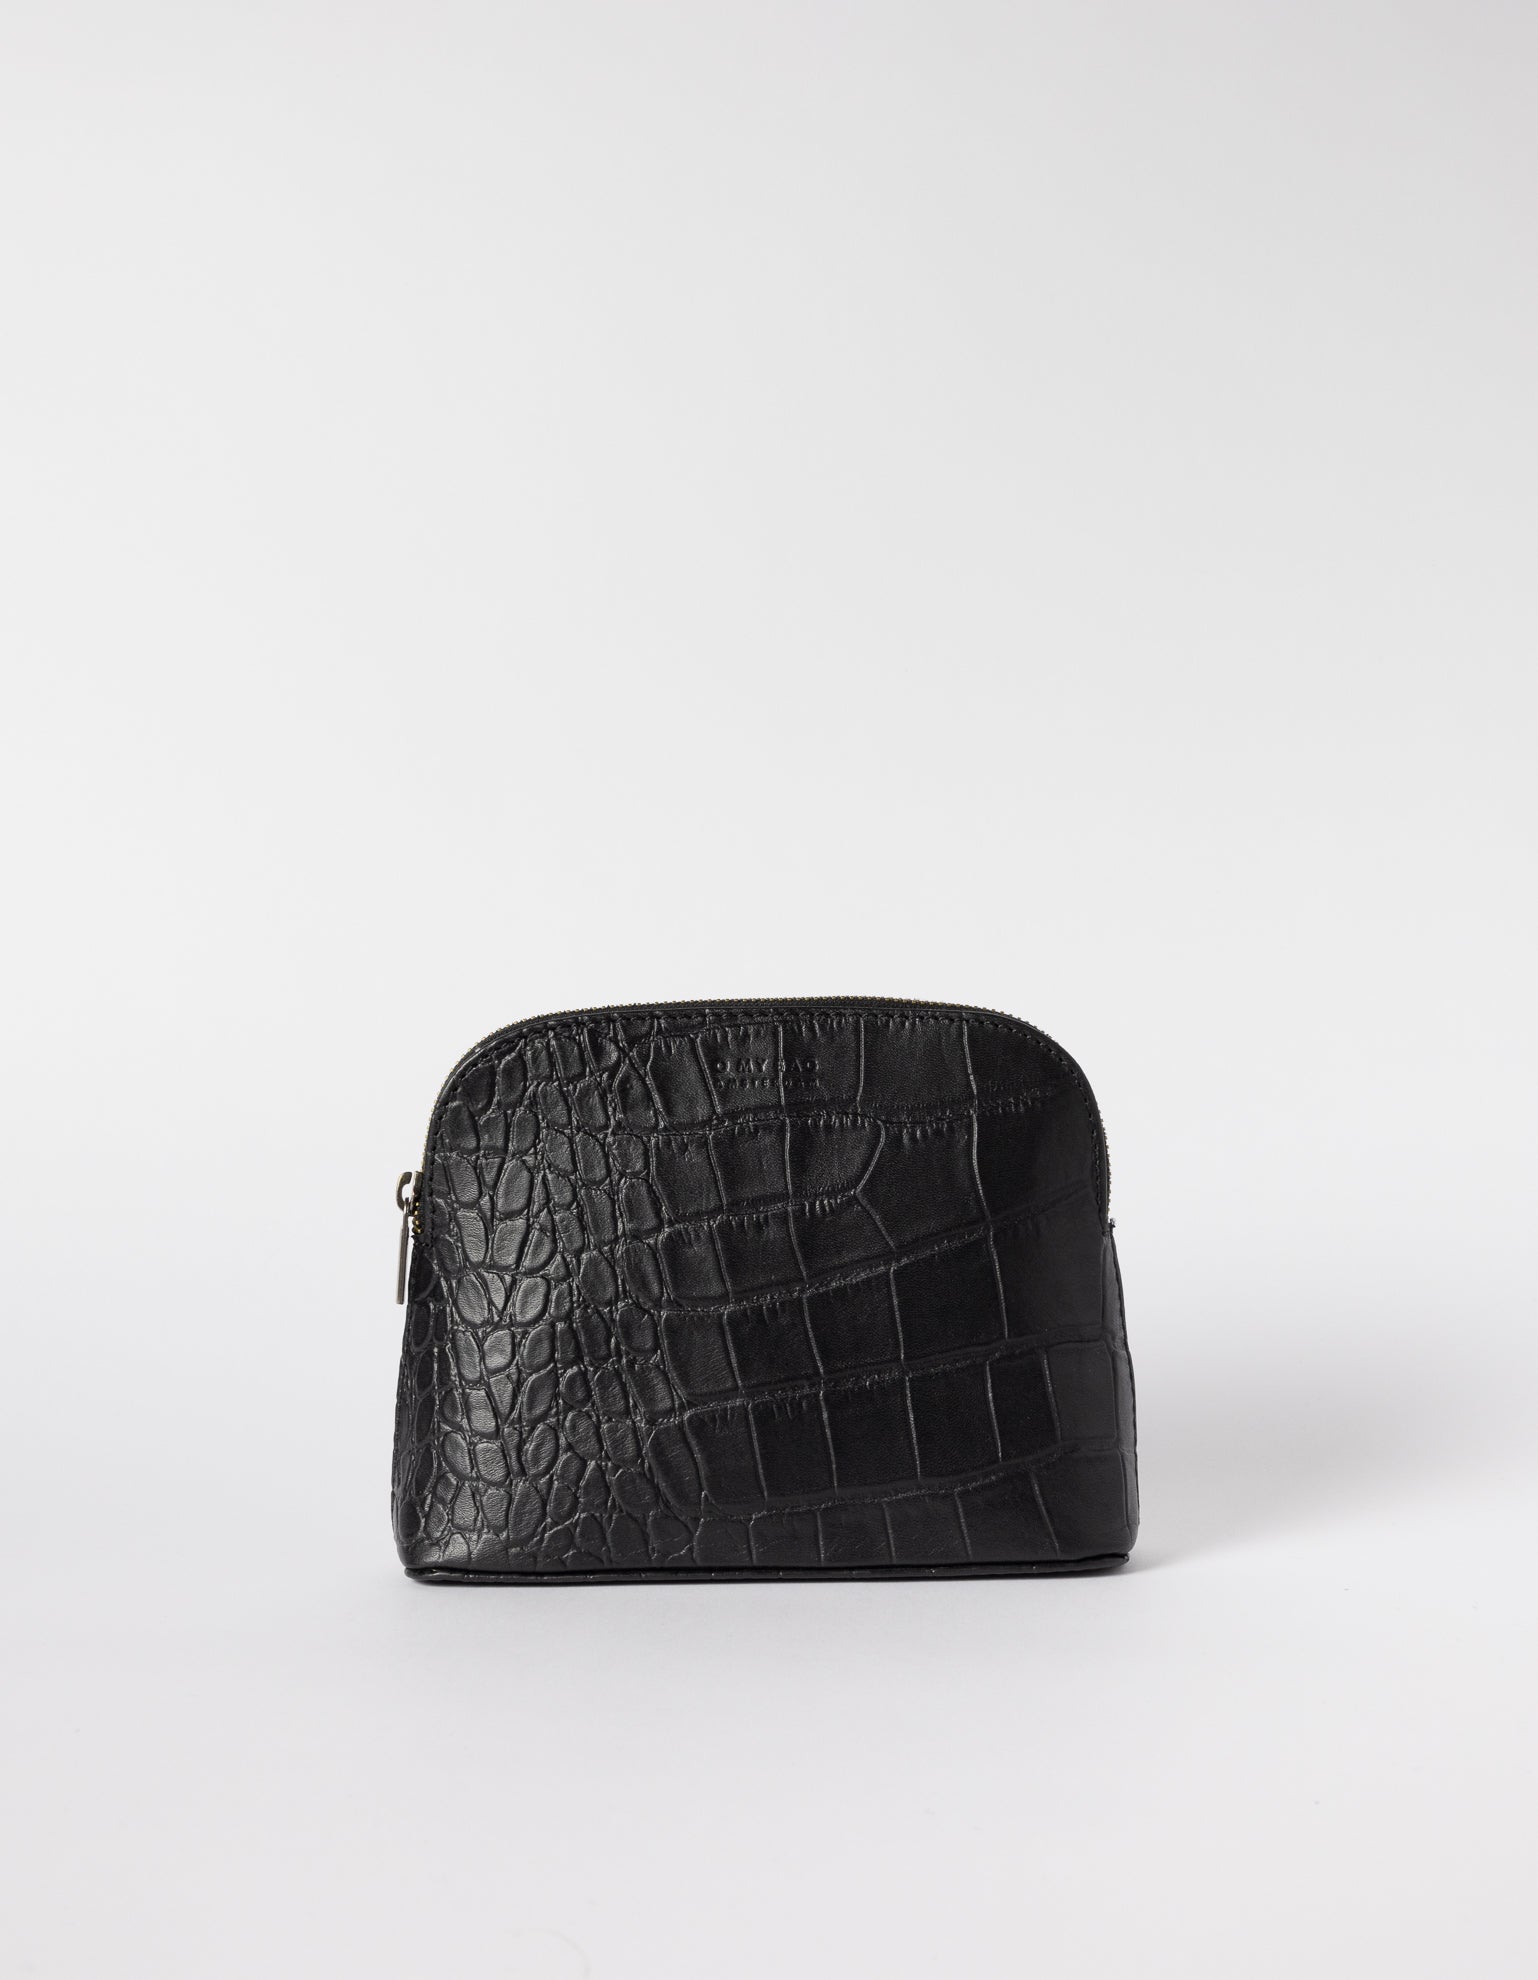 compulsoryking Faux Leather Handbags for Women Fashion Top Handle Bag  Adjustable Strap Shoulder Bag Large Capacity Tote Bags(black): Handbags:  Amazon.com